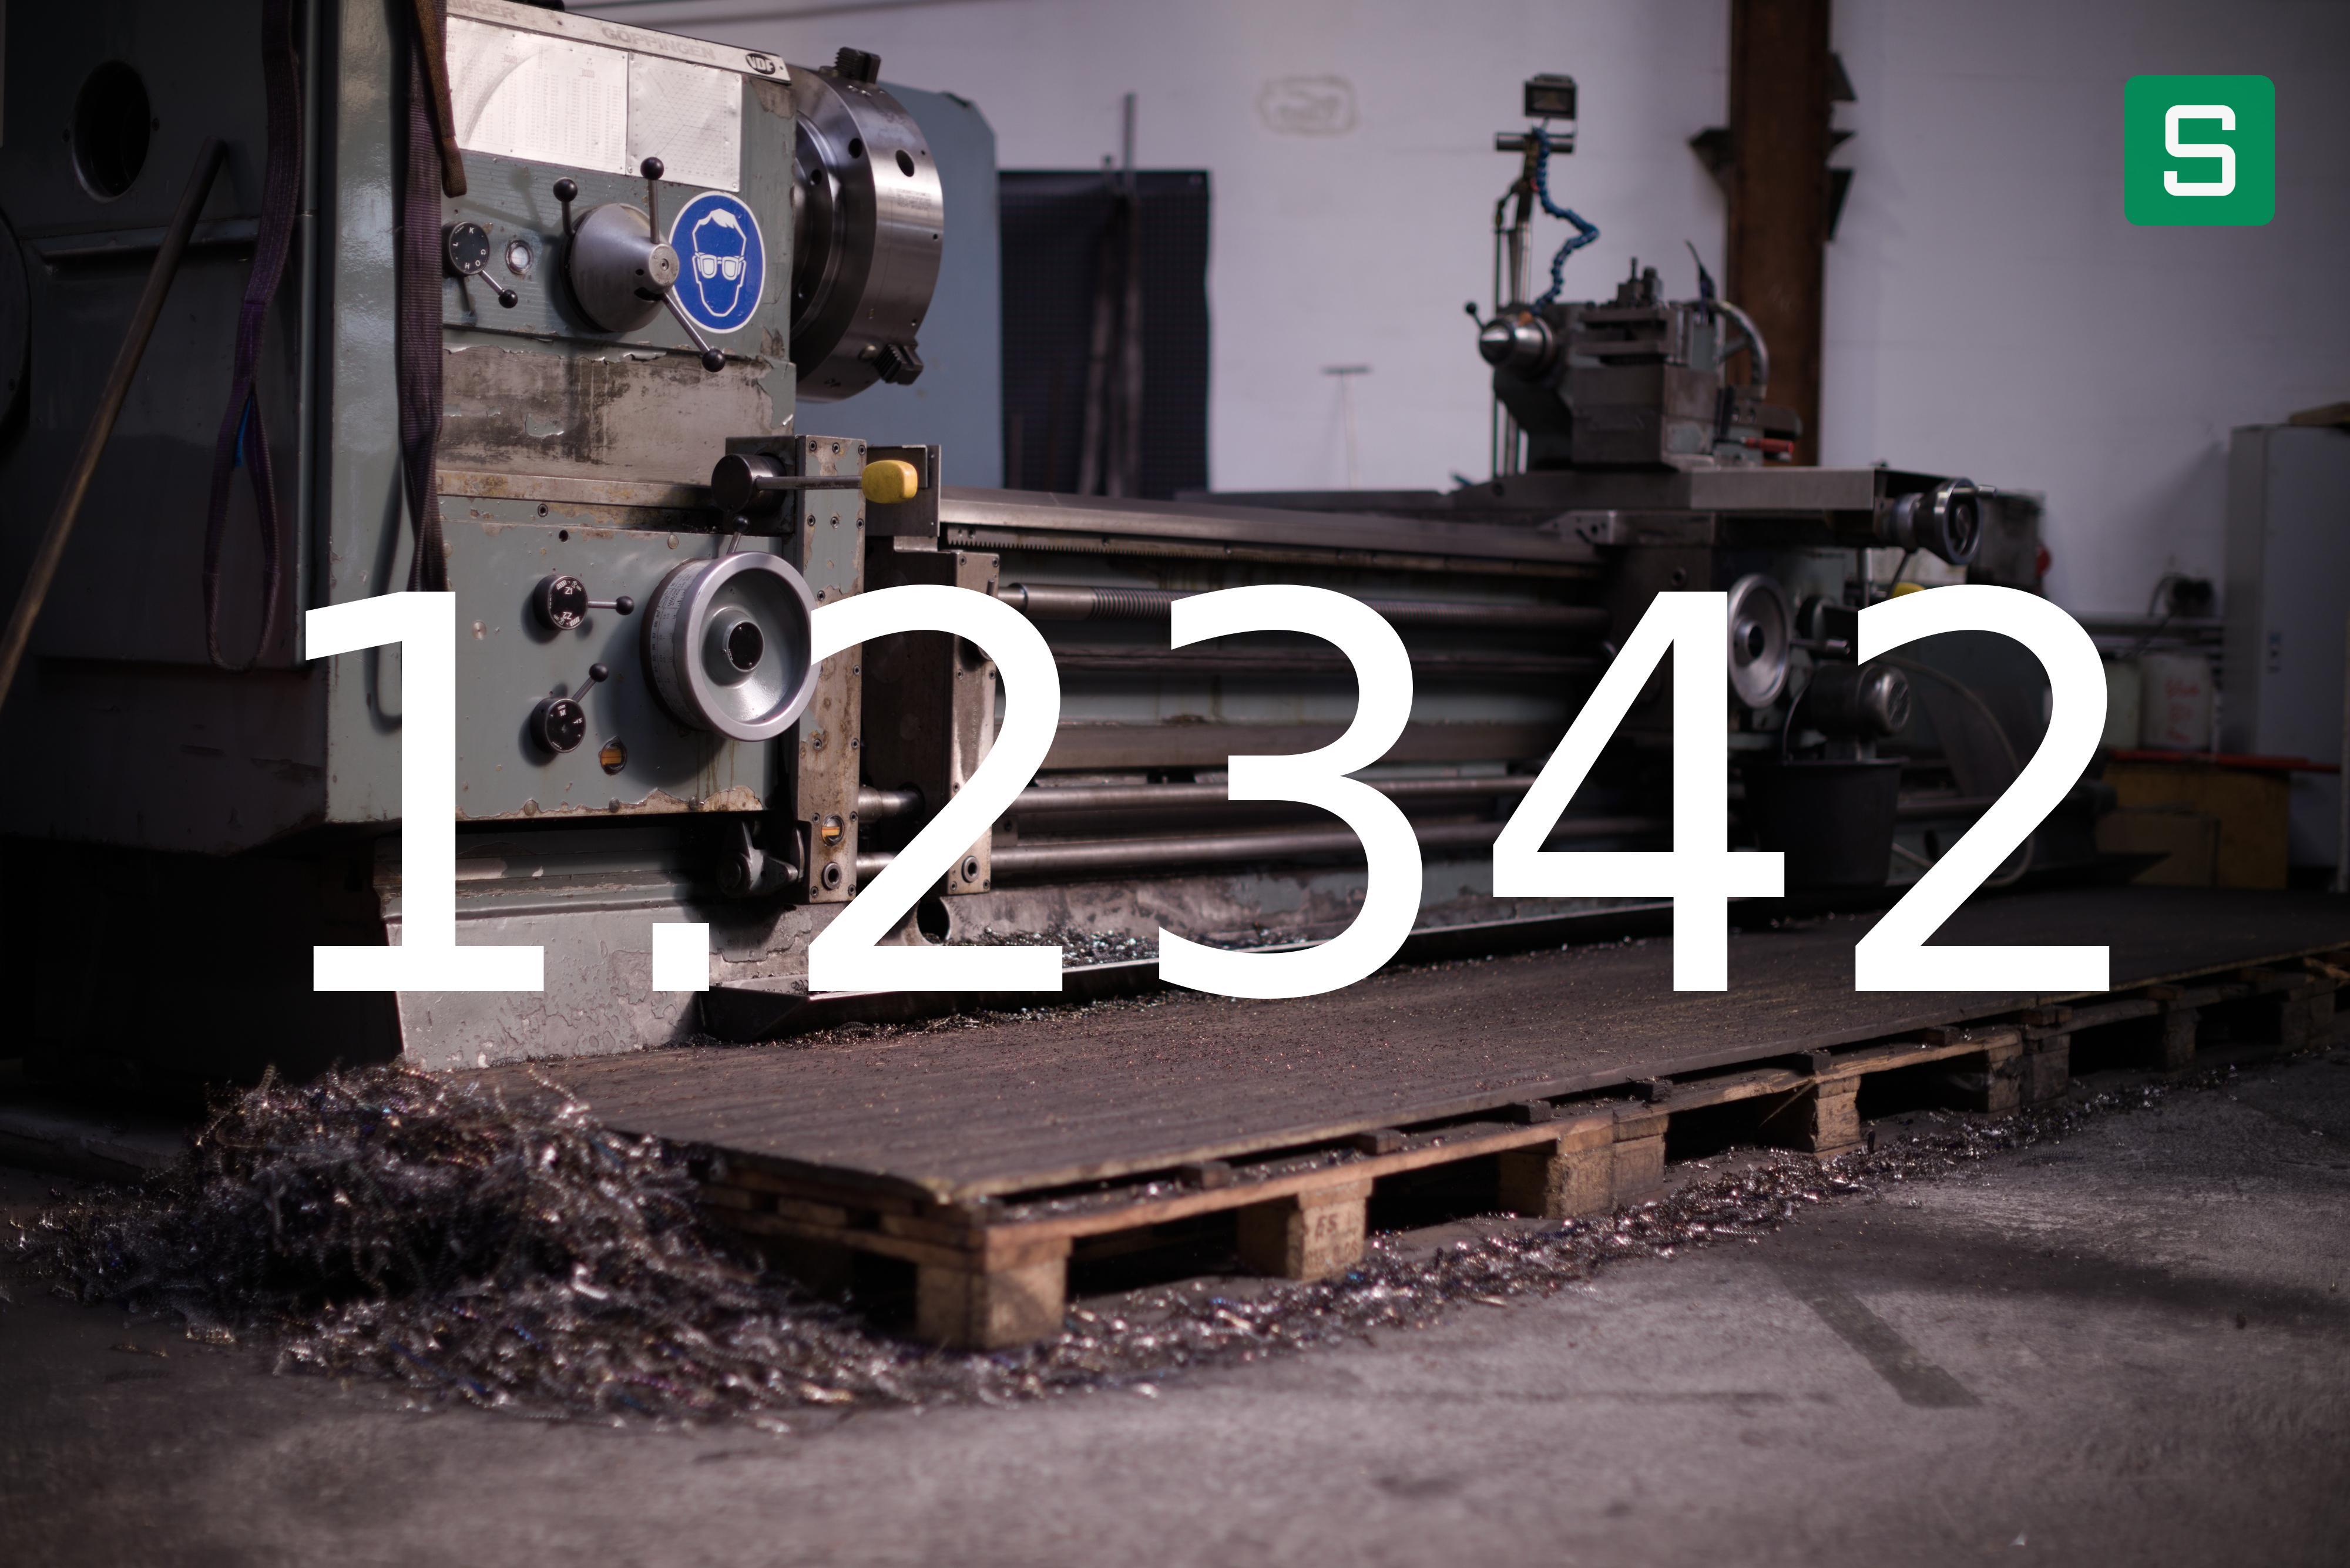 Steel Material: 1.2342